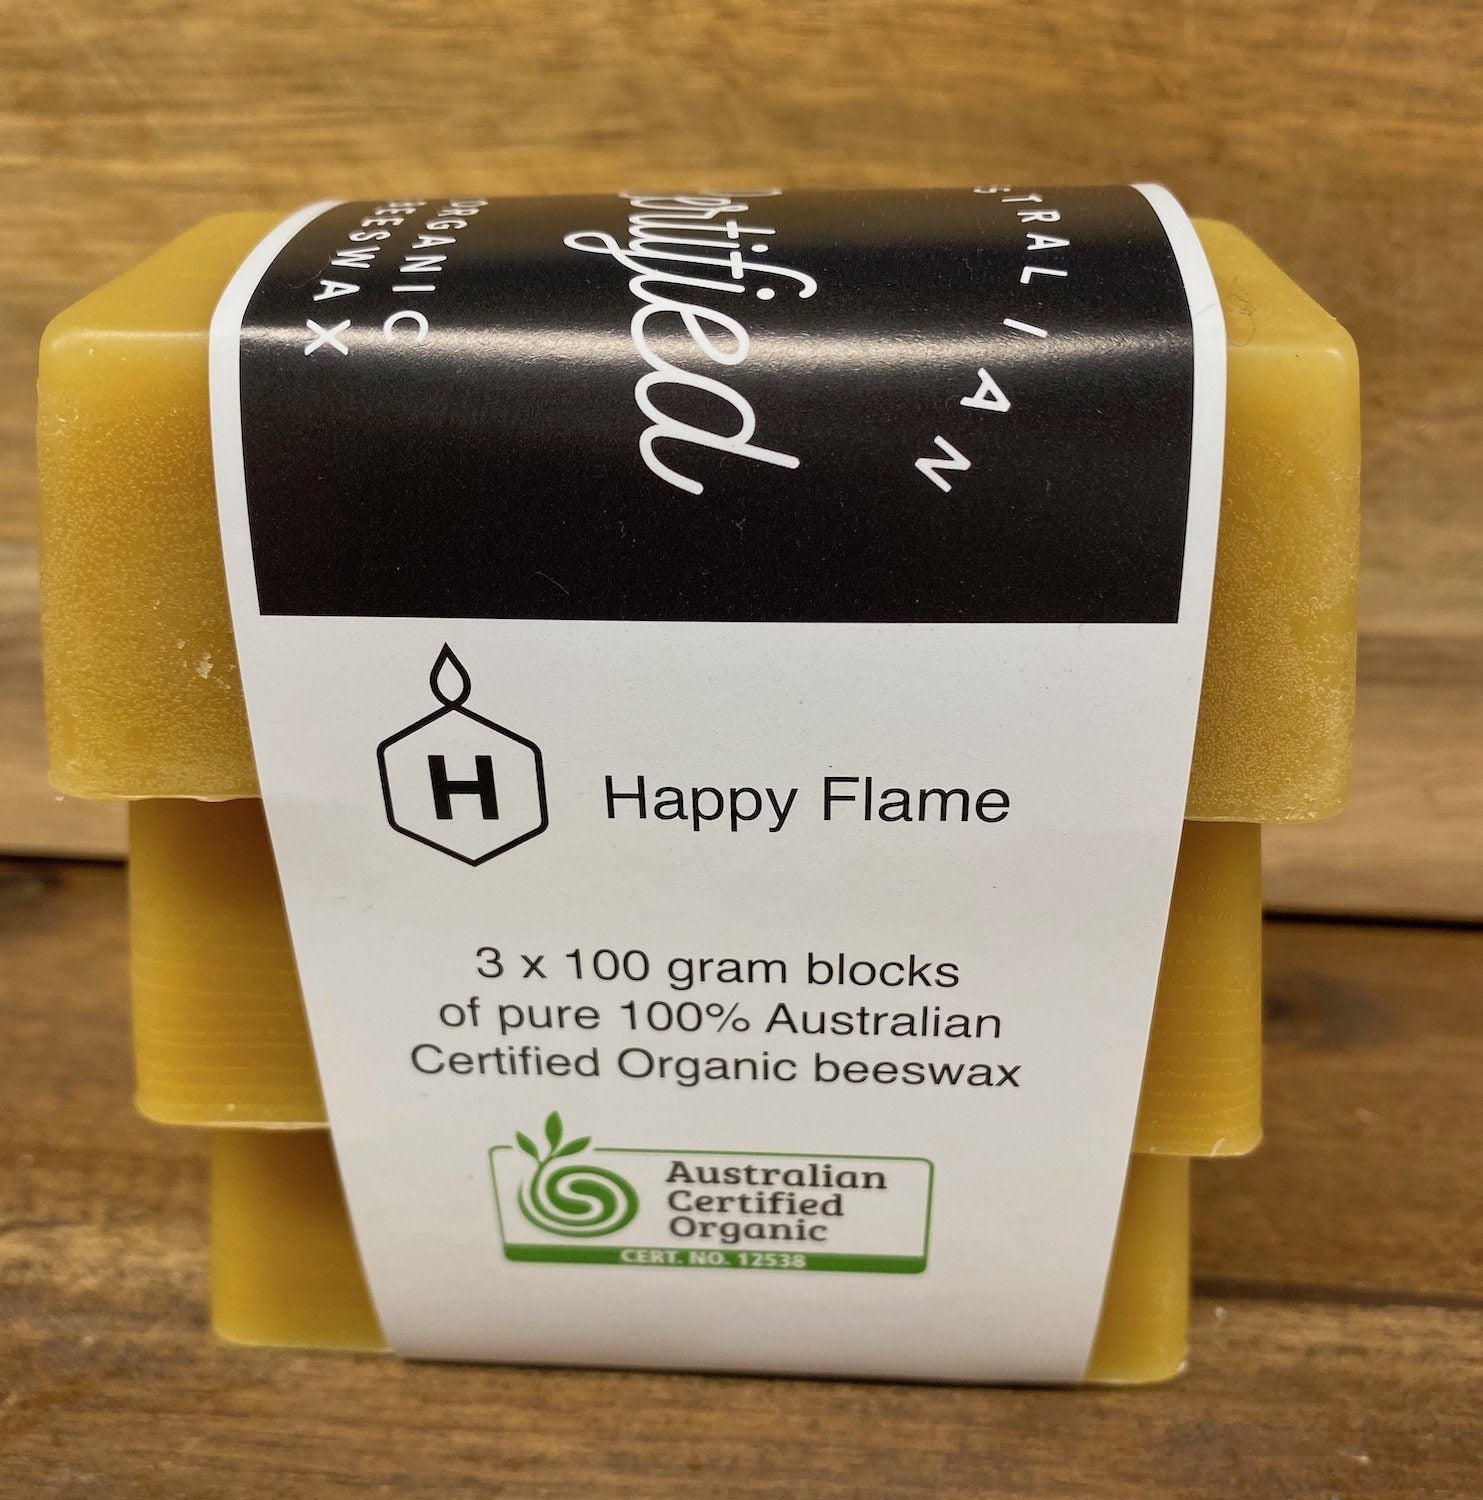 Happy Flame beeswax Australian Certified Organic Beeswax blocks